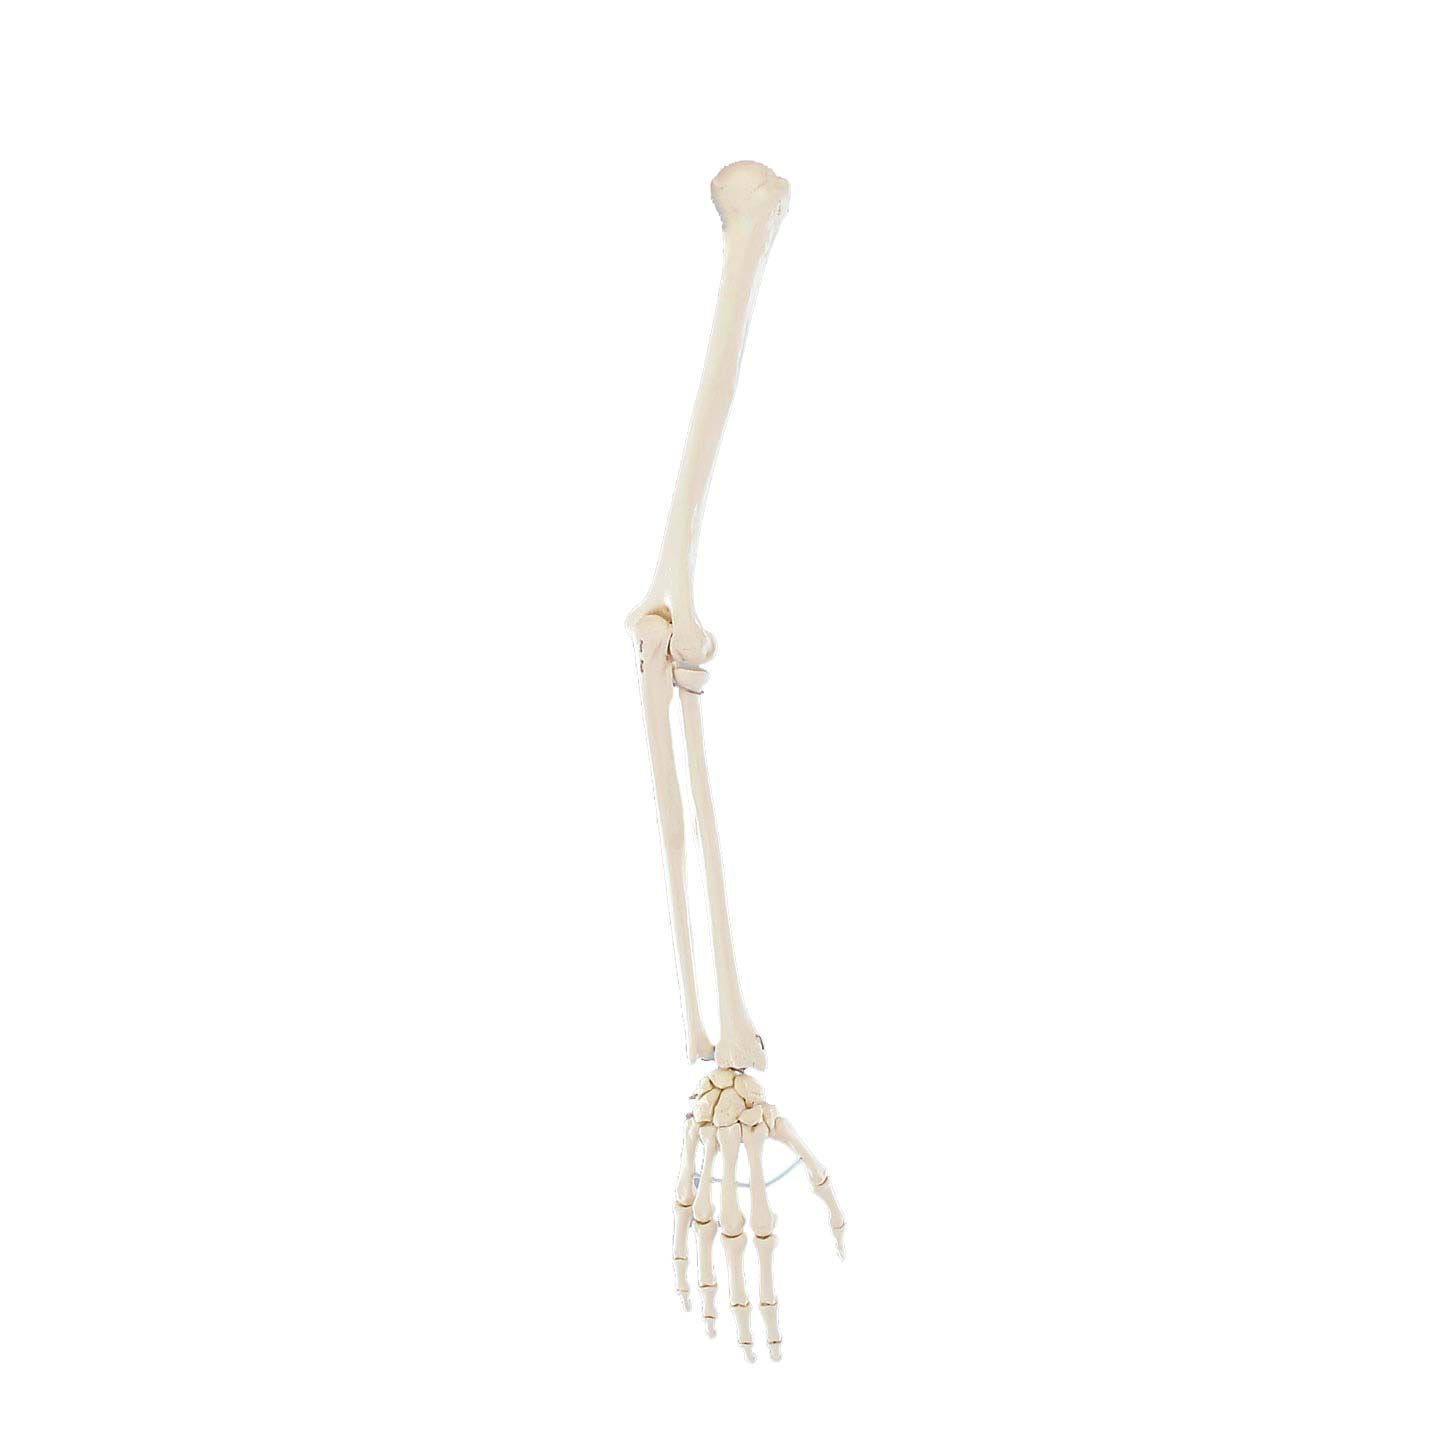 Erler Zimmer Arm Skeleton with Hand